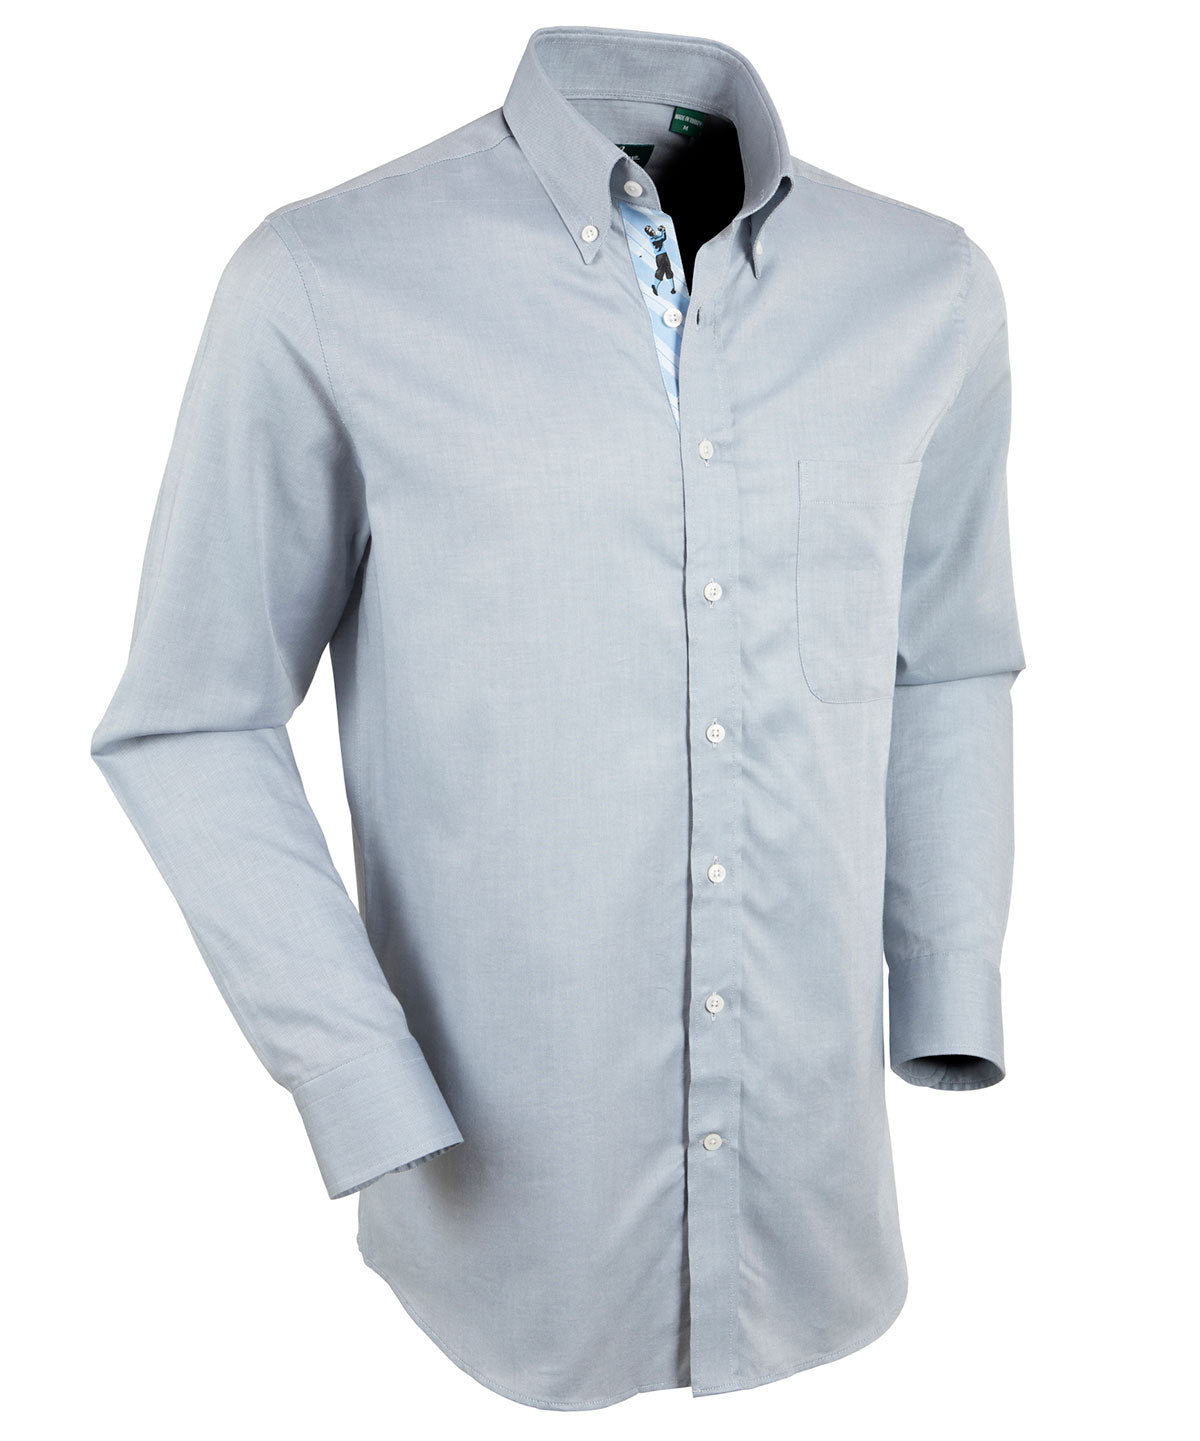 Signature 100% Cotton Oxford Button-Down Short Sleeve Shirt - Bobby Jones